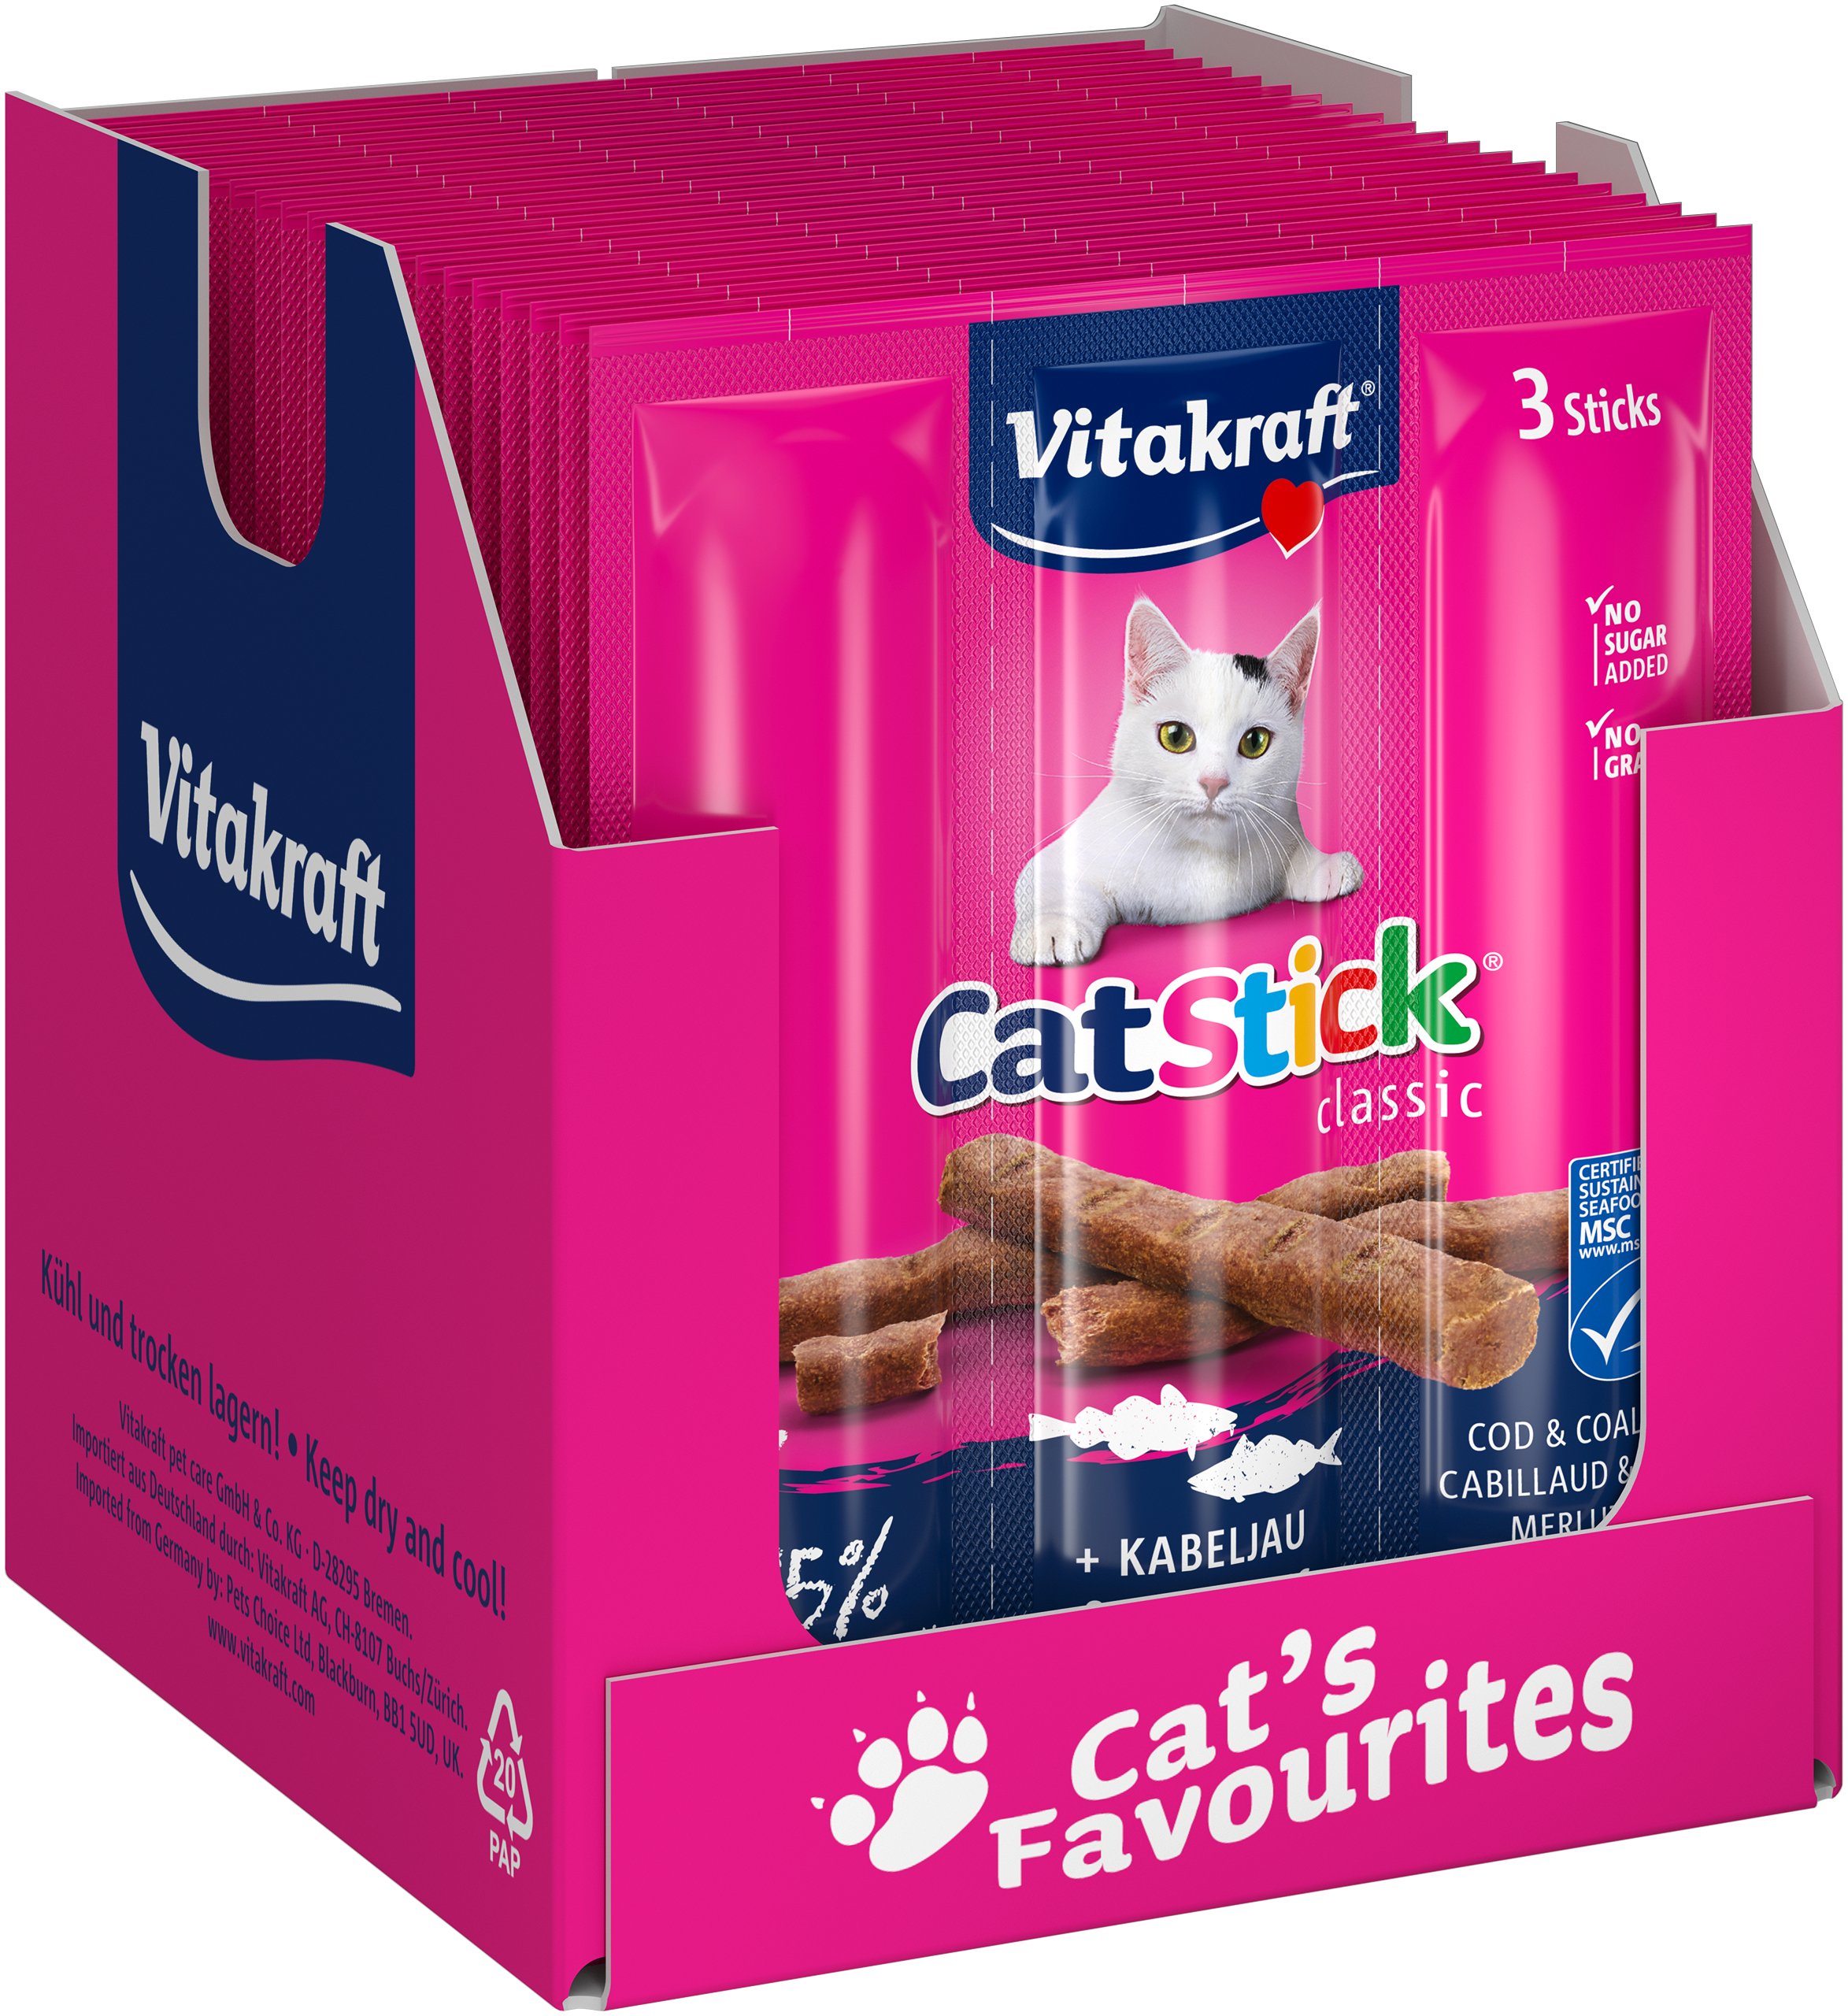 Vitakraft - Cat treats - 20 x Cat Stick® with cod and coalfish x 3 sticks - 18g (bundle) - Kjæledyr og utstyr